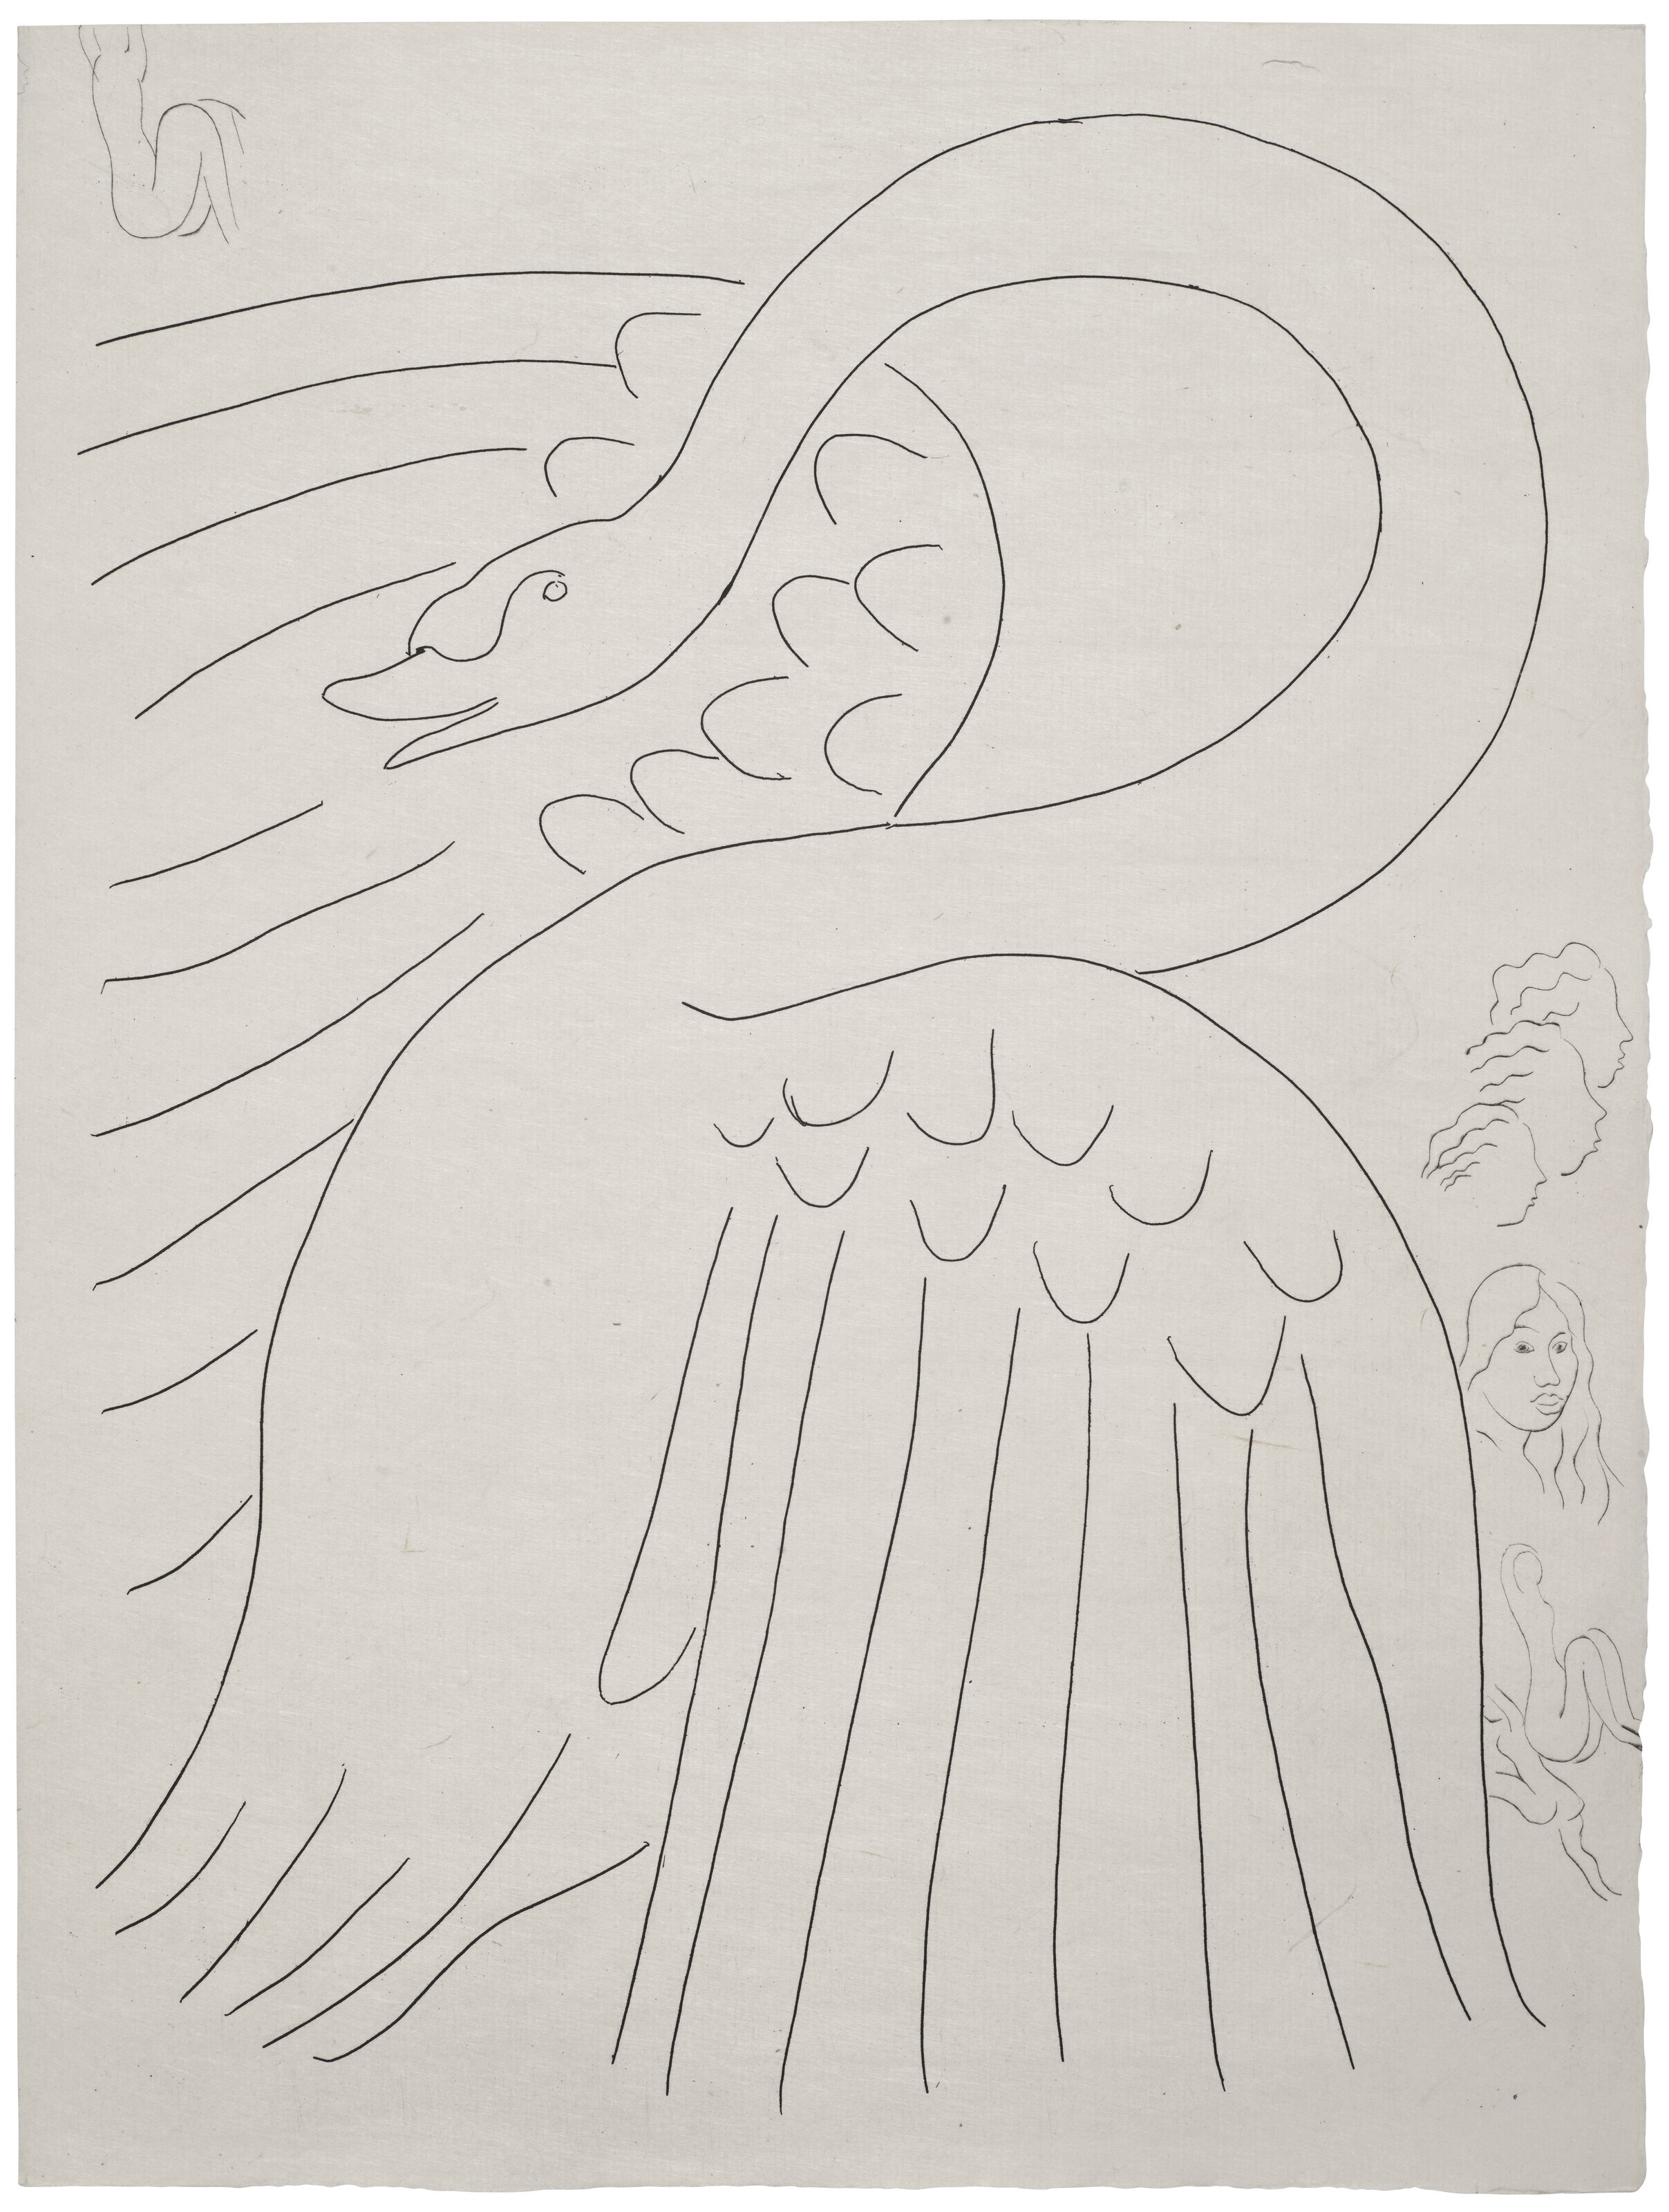 Artwork by Henri Matisse, Stéphane Mallarmé, Poésies, Made of etchings, on Japon paper